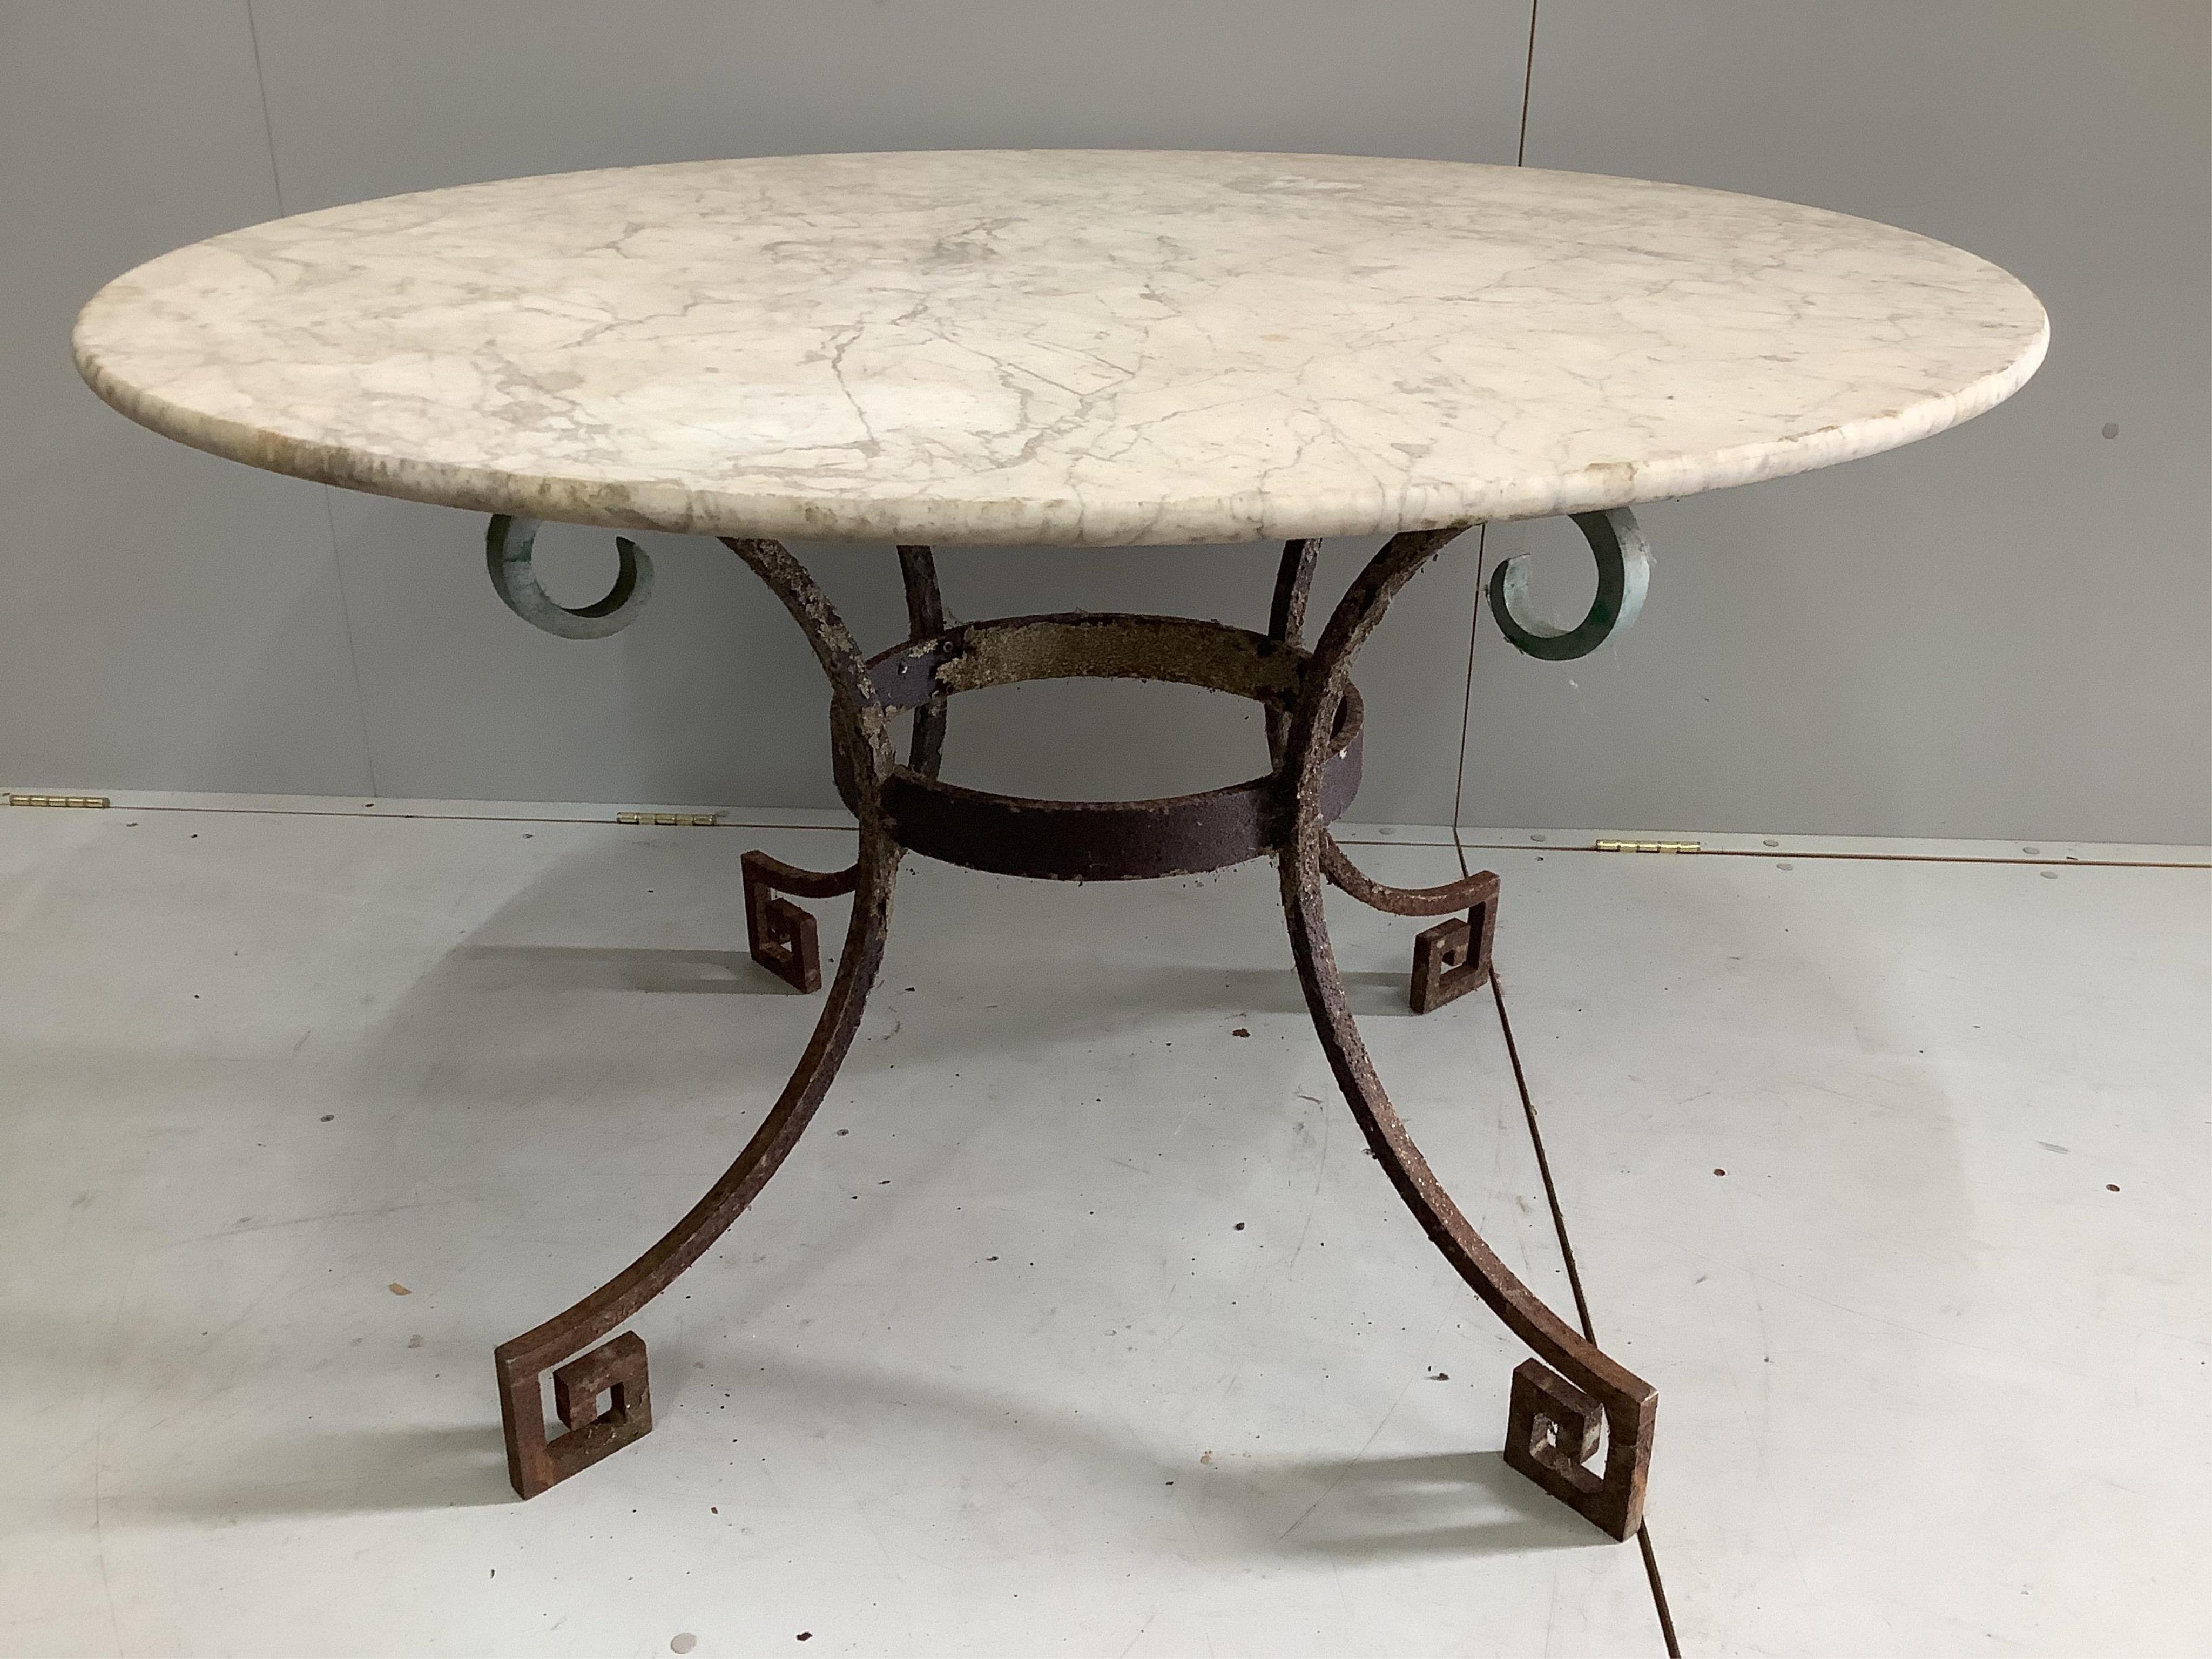 A circular wrought iron white marble topped garden table, diameter 120cm, height 73cm. Condition - good